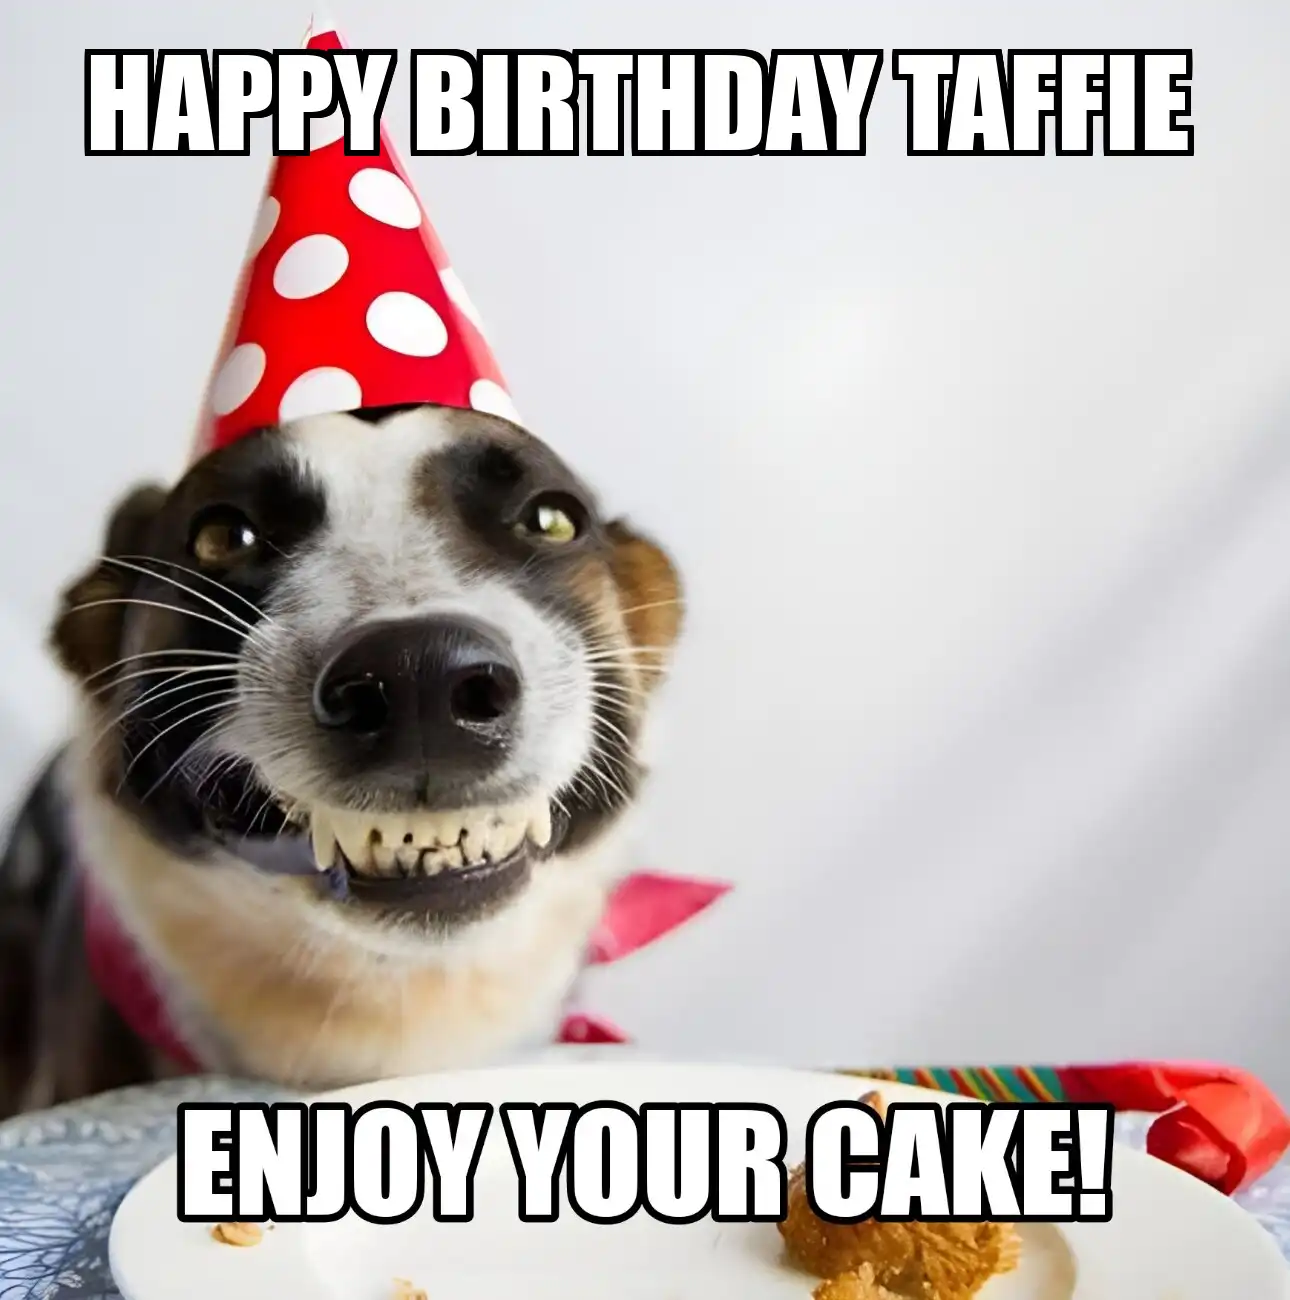 Happy Birthday Taffie Enjoy Your Cake Dog Meme